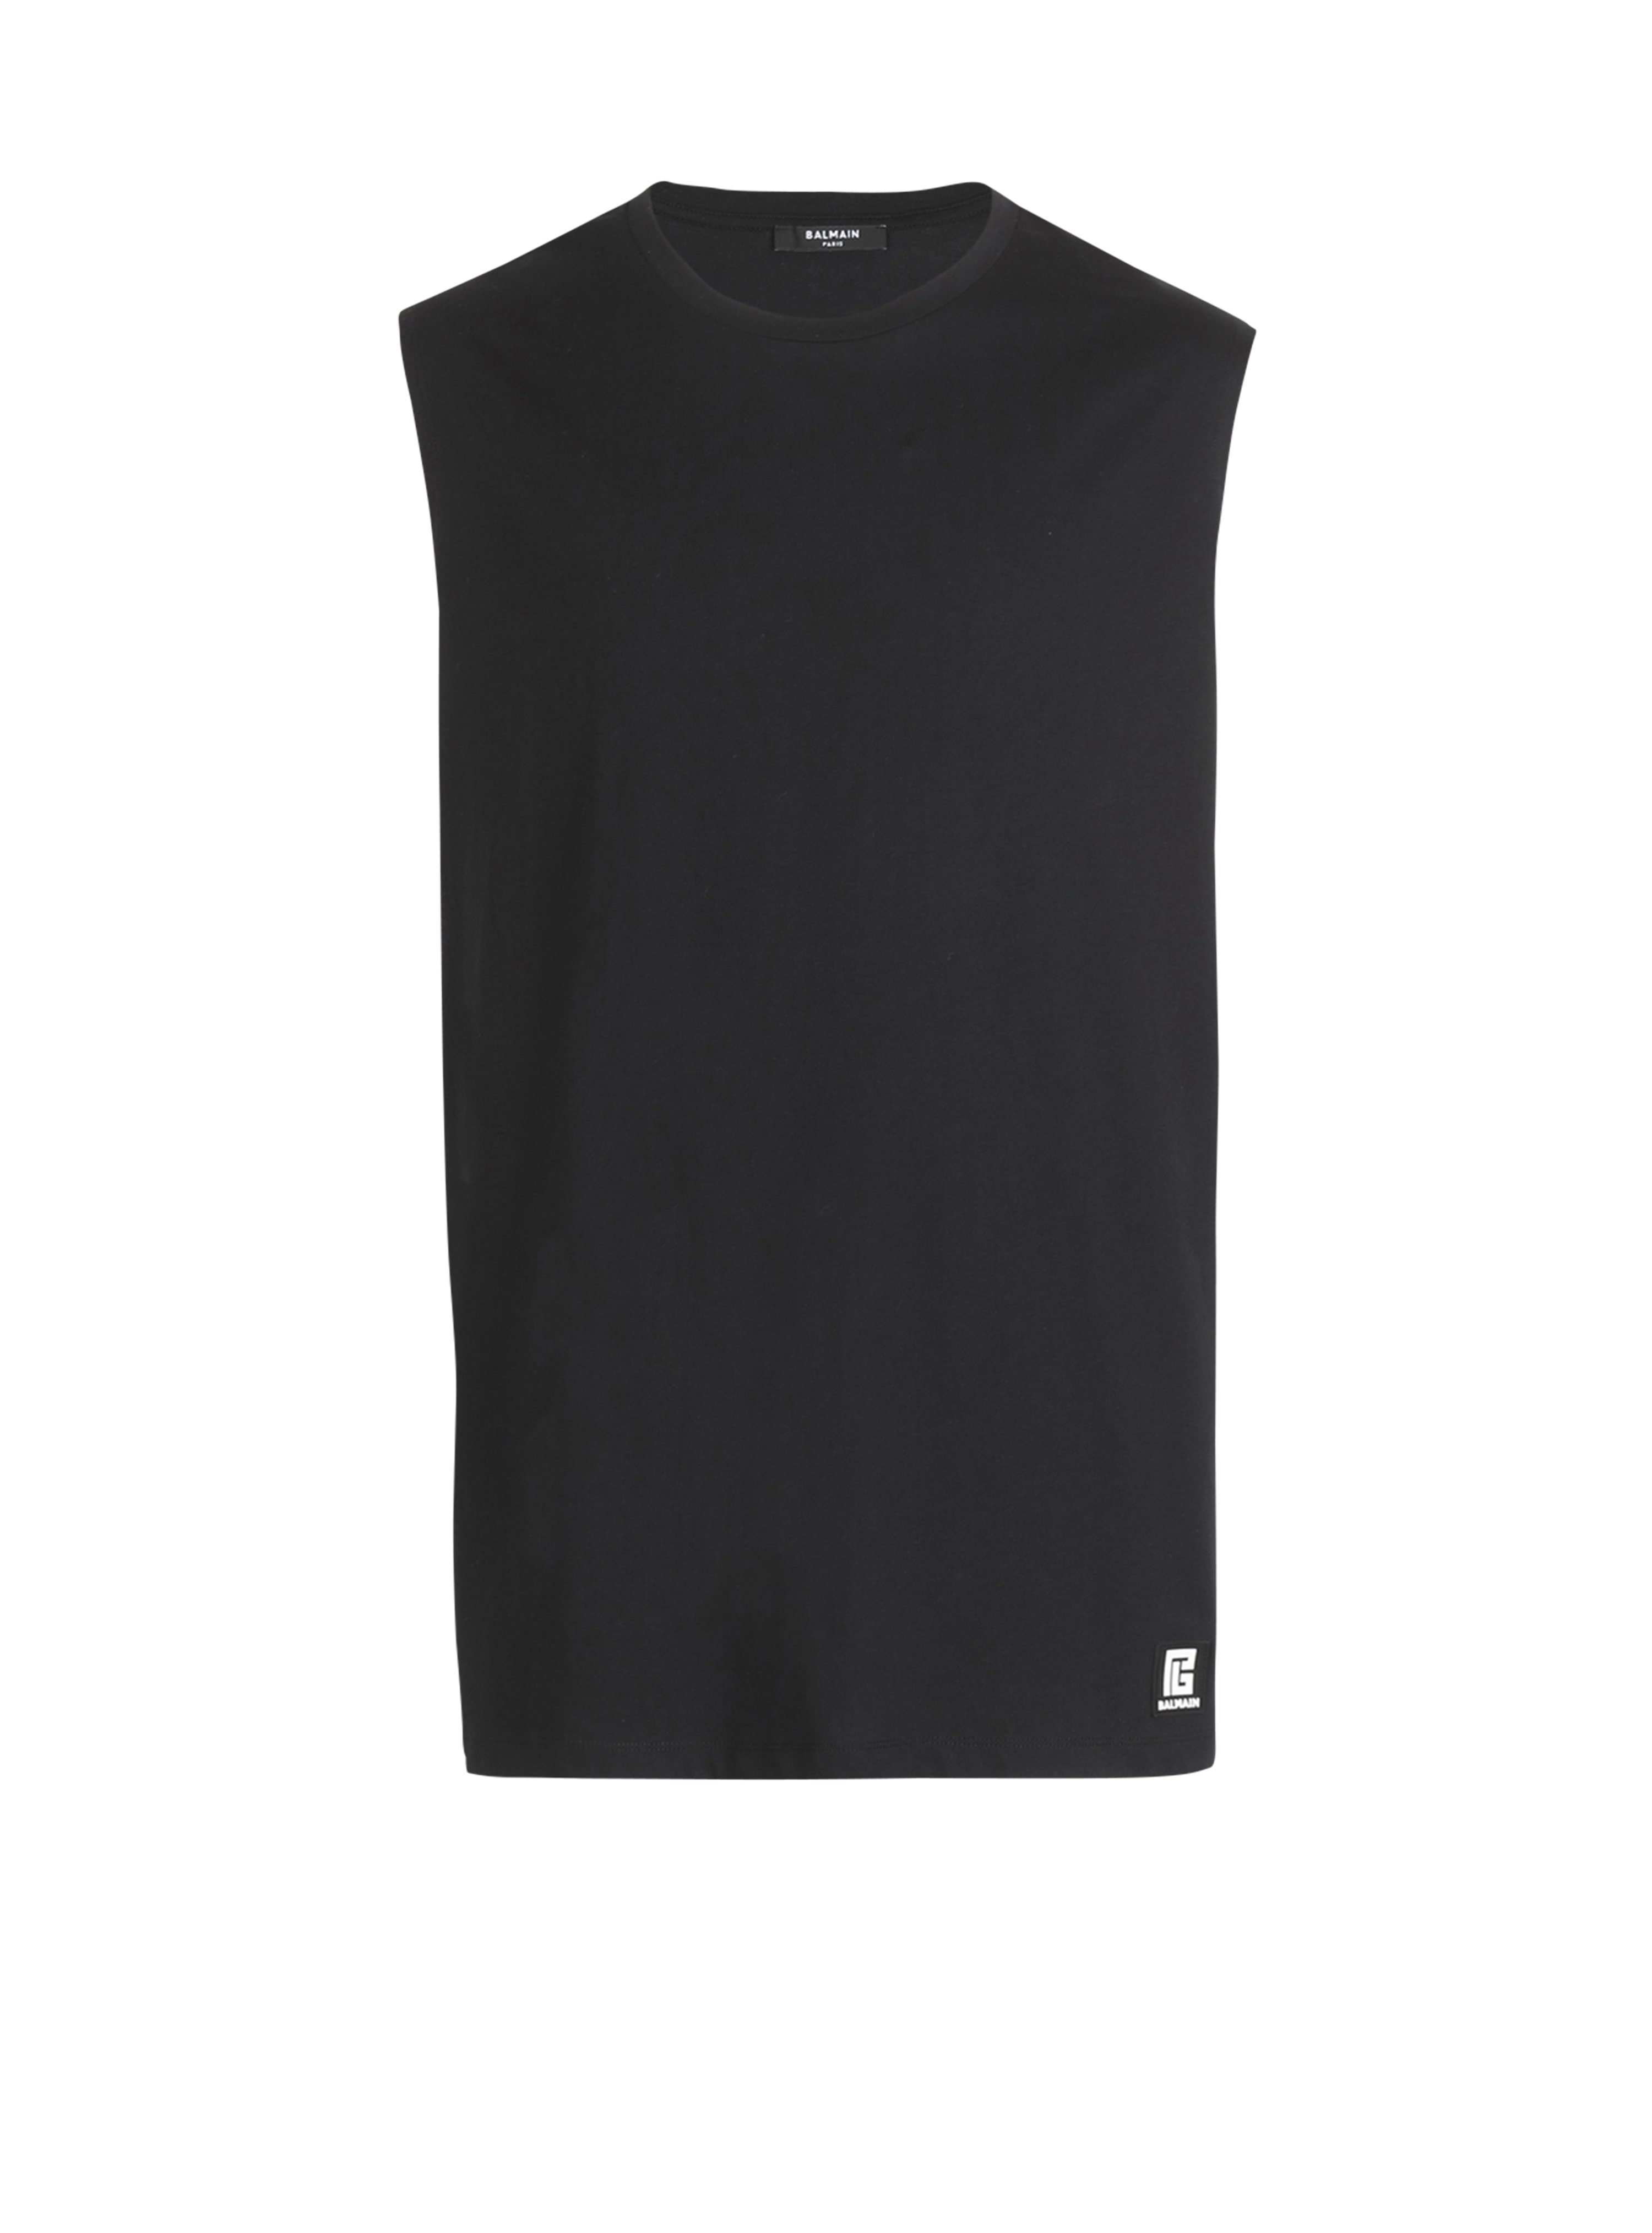 Camiseta de algodón con logotipo de Balmain estampado, negro